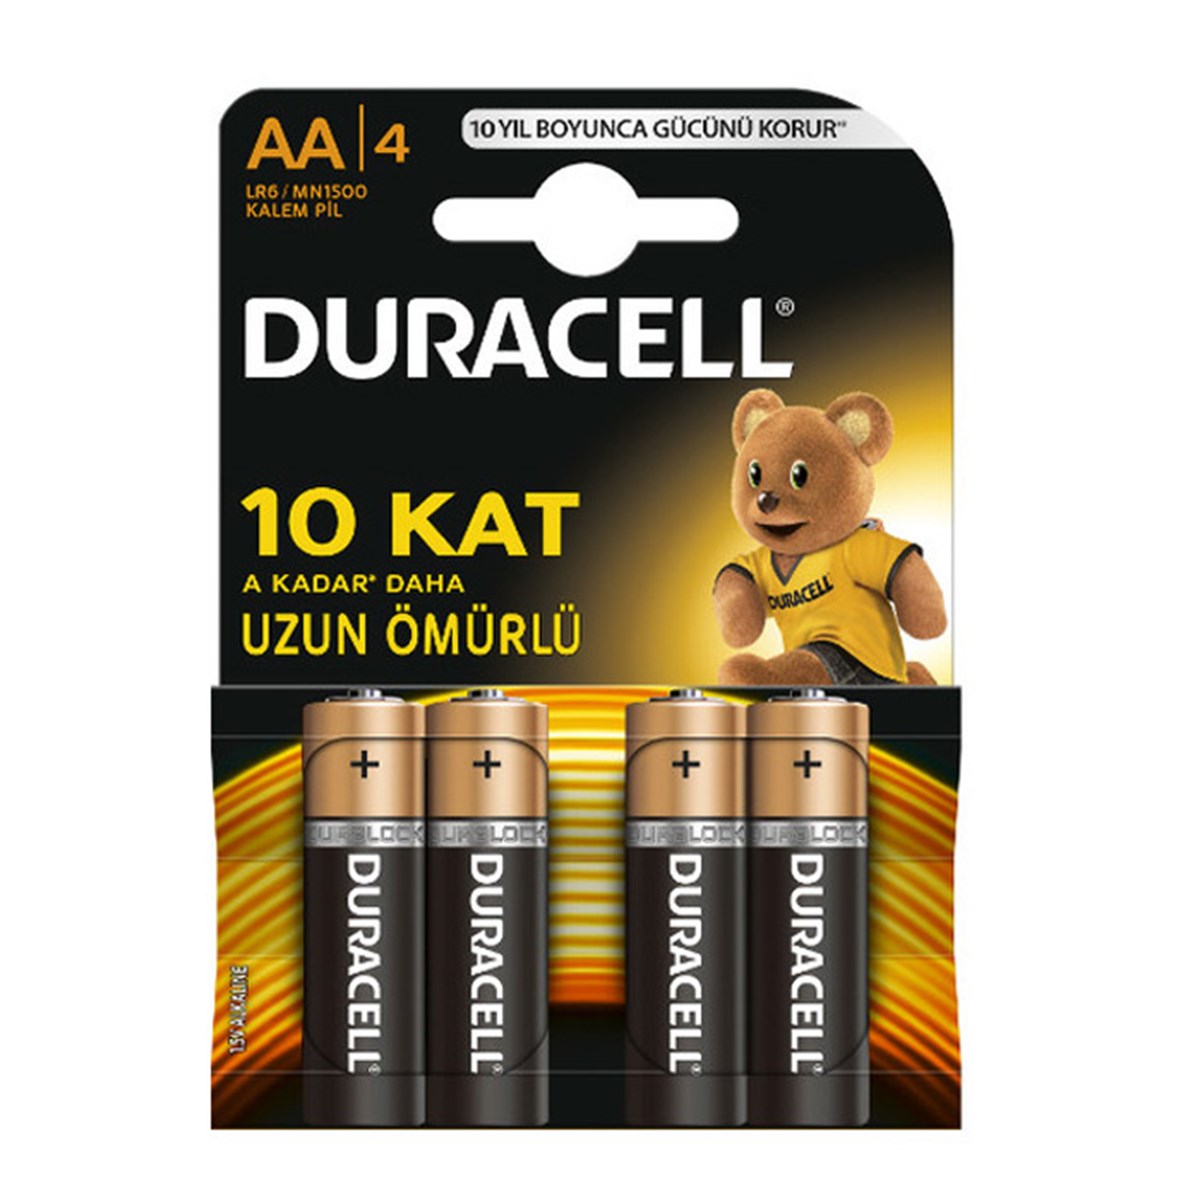 Duracell Alkalin AA 1.5V Kalem Pil 4'lü